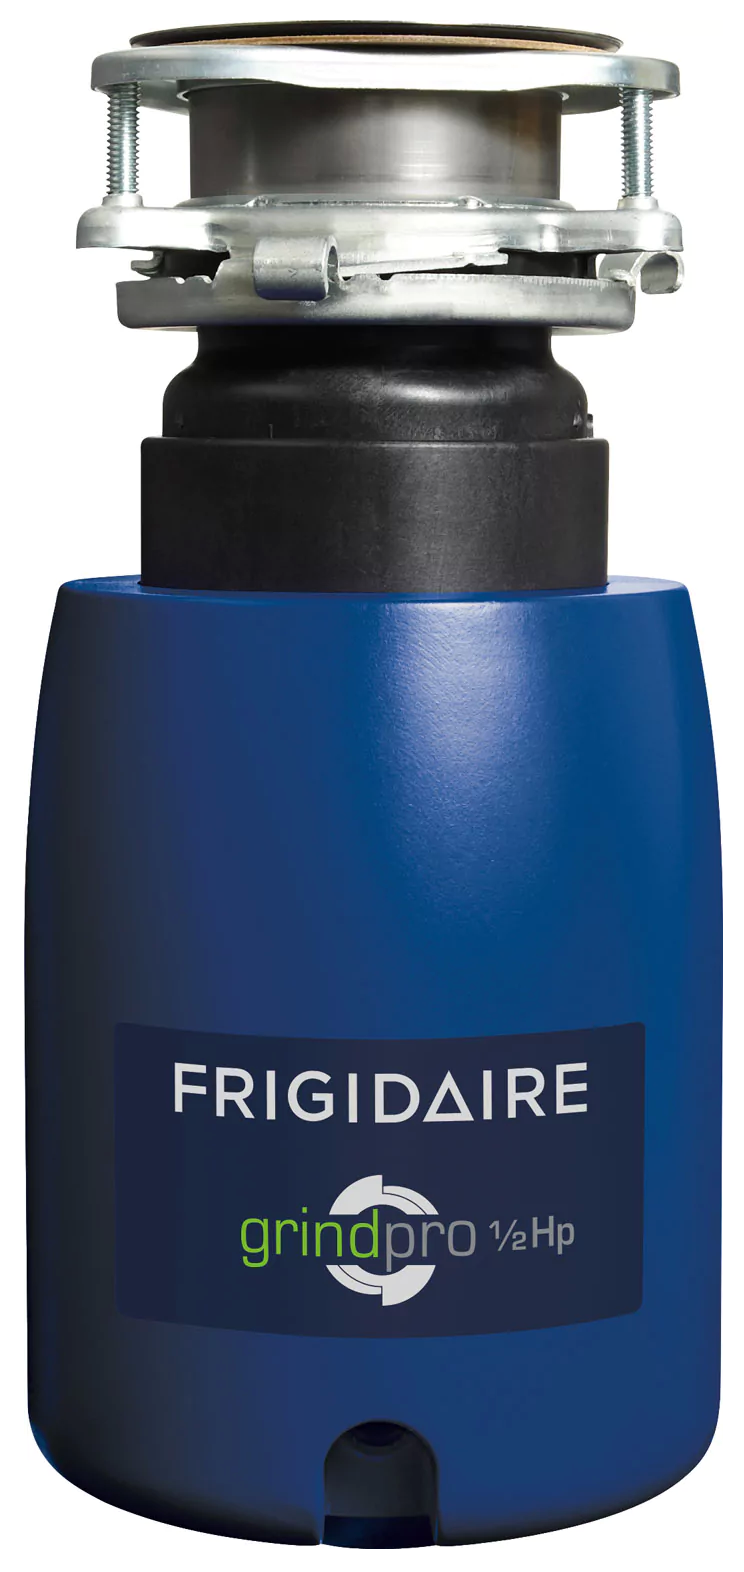 Frigidaire® 1/2 HP Food Waste Disposer-Classic Blue